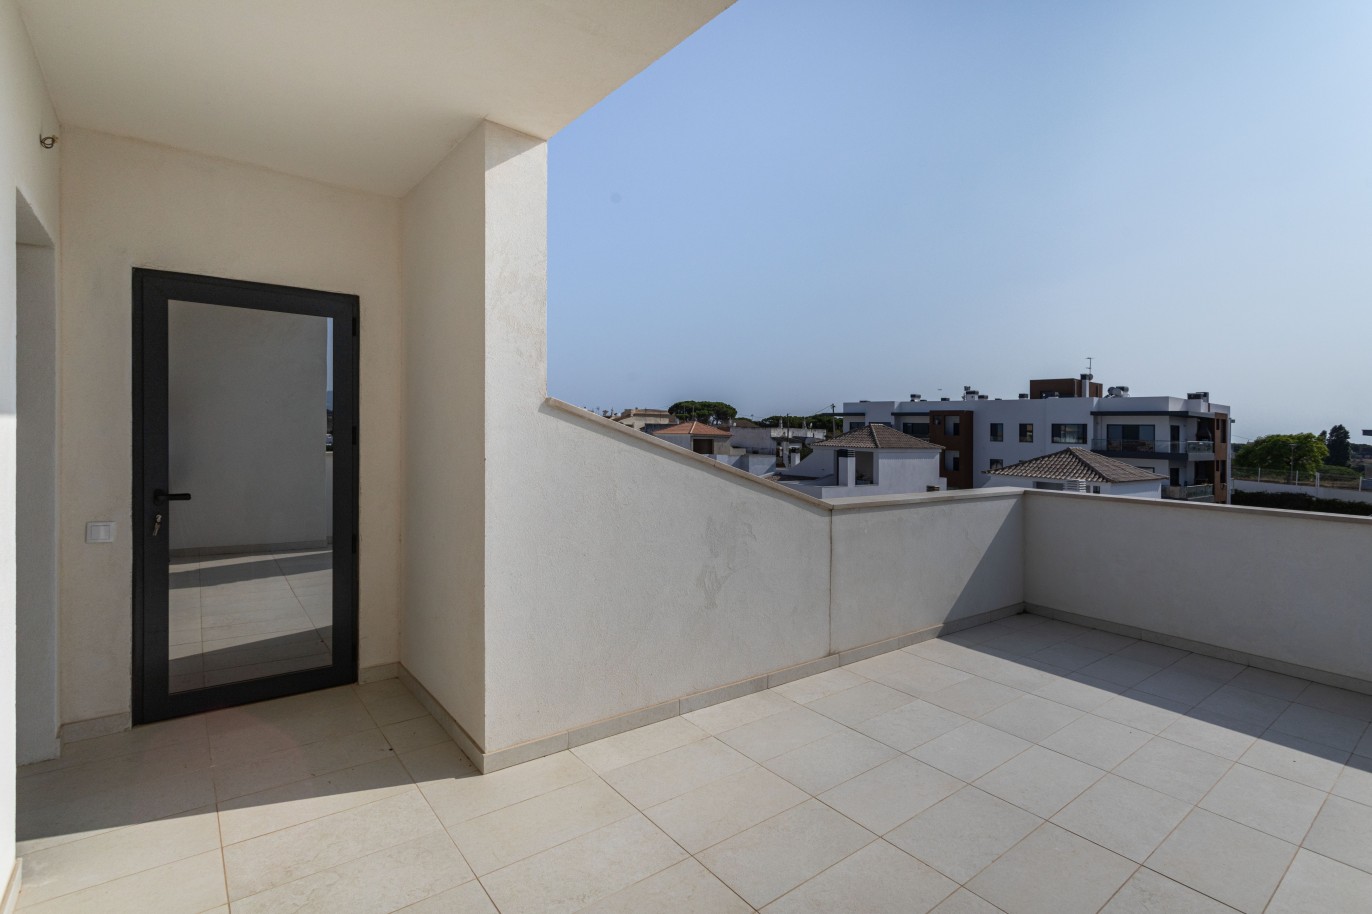 4 Bedroom Villa with pool, for sale in Gambelas, Algarve_231144